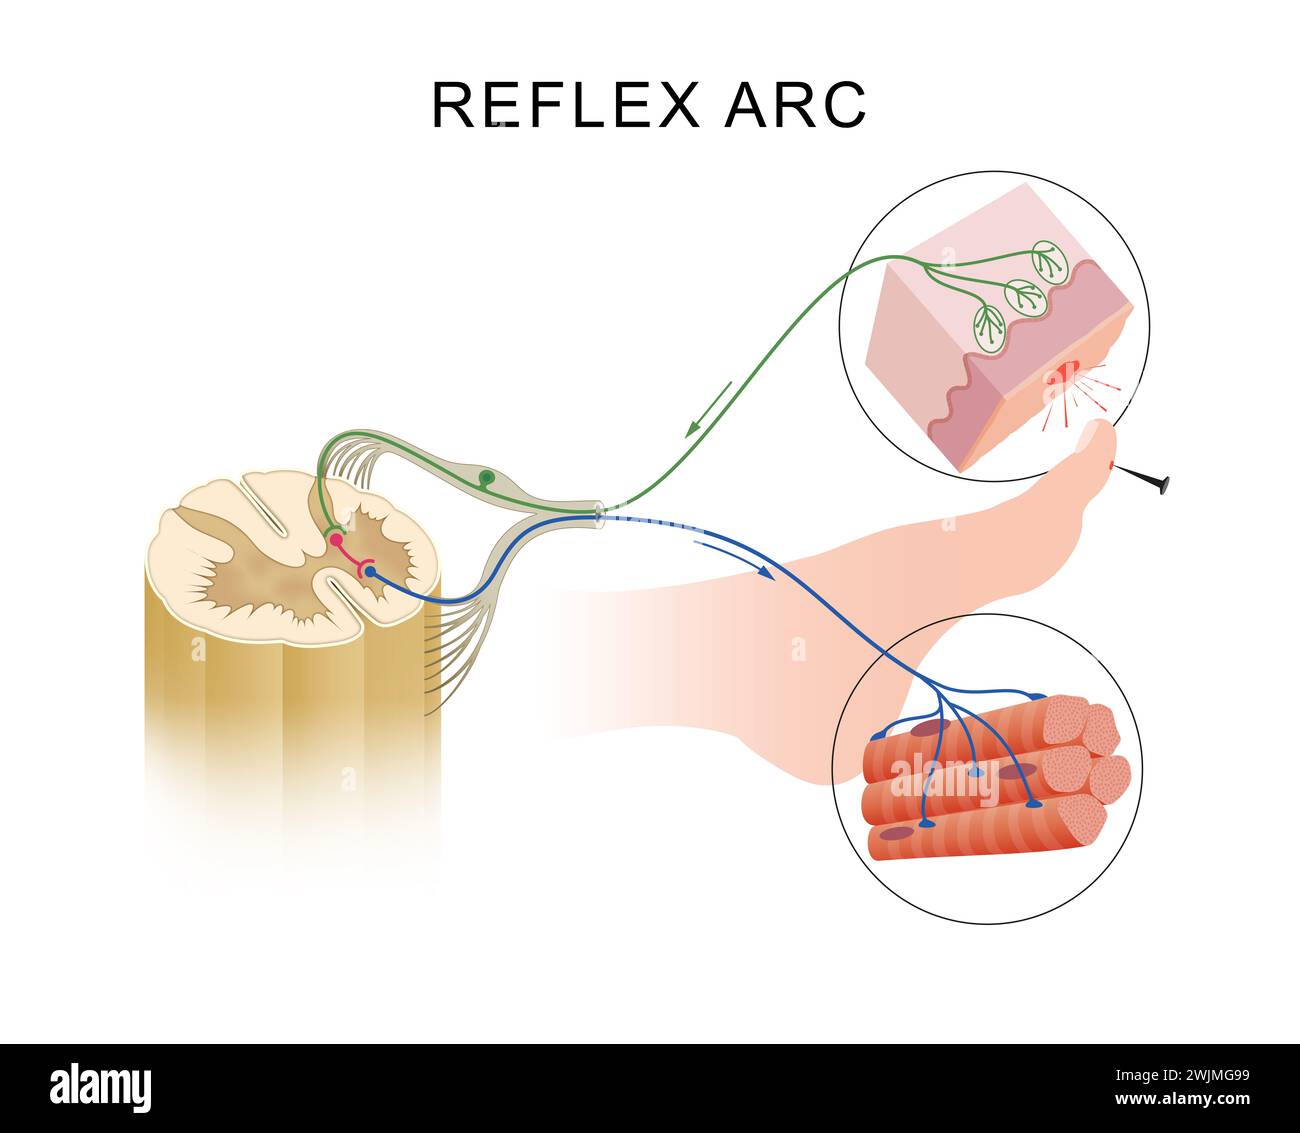 Reflex Action and Reflex Arc Stock Photo